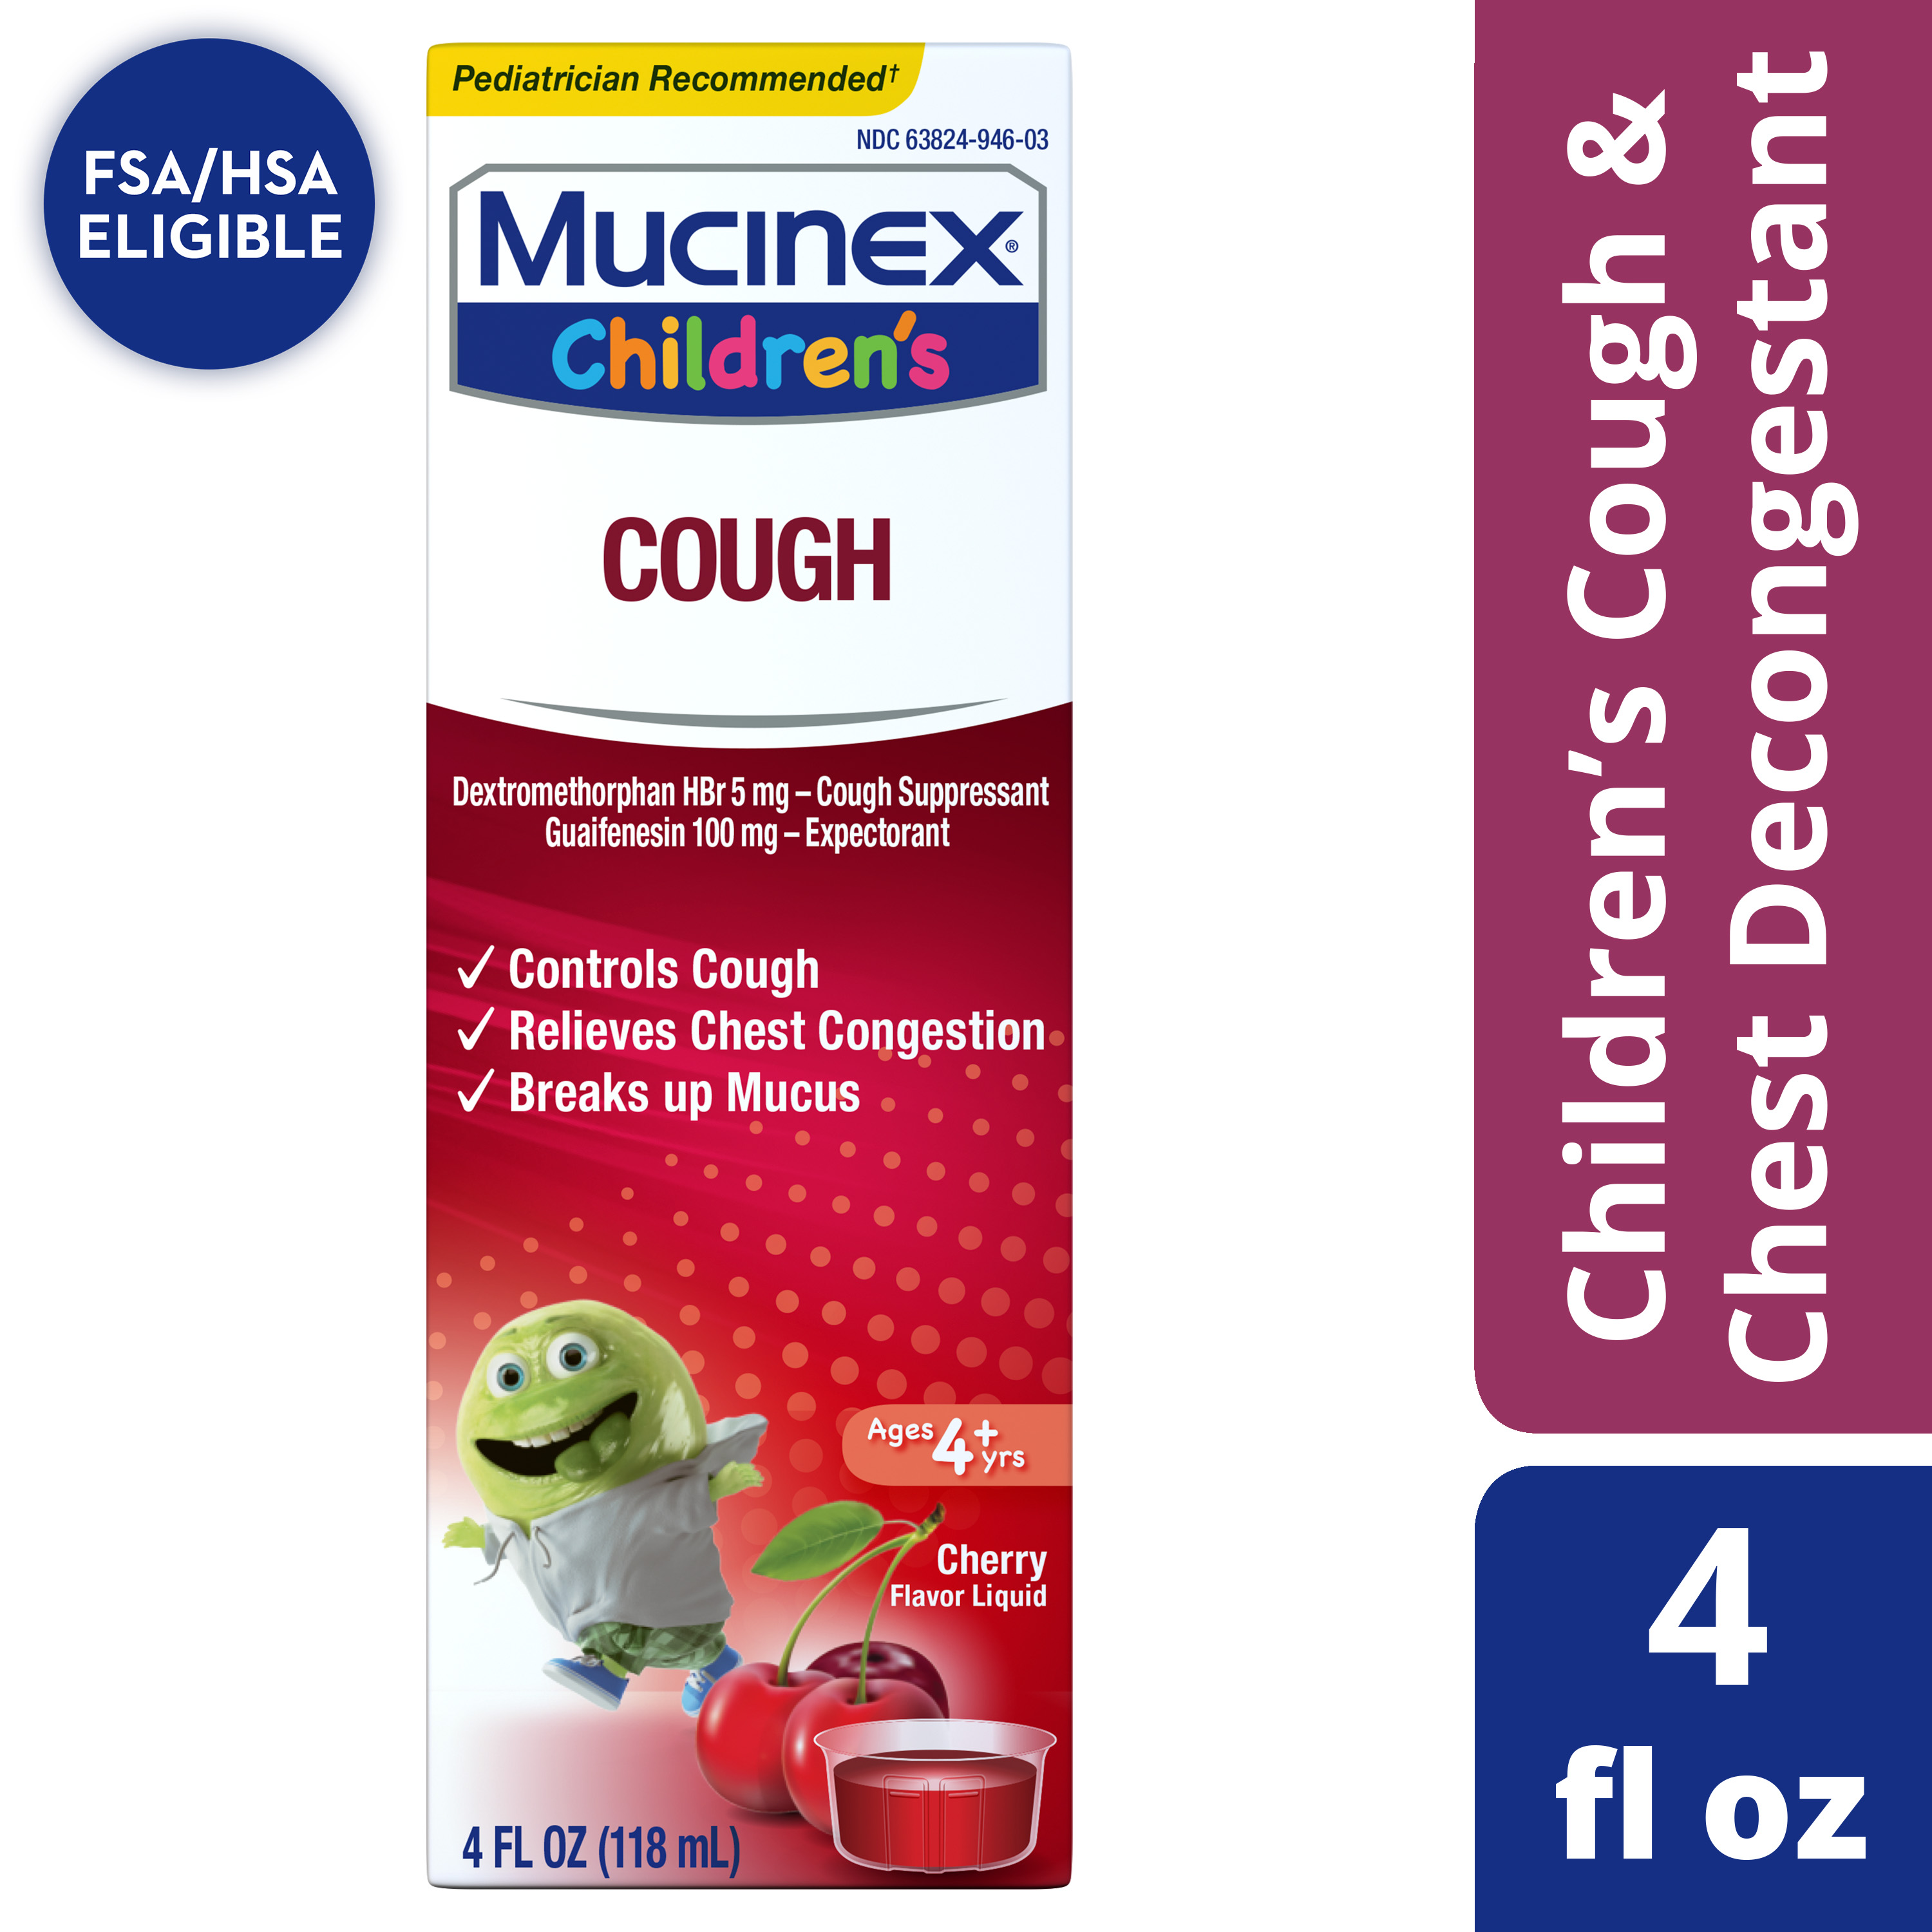 Mucinex Children's Cough Medicine , Chest Congestion Relief, Cherry, 4 fl oz - image 1 of 15